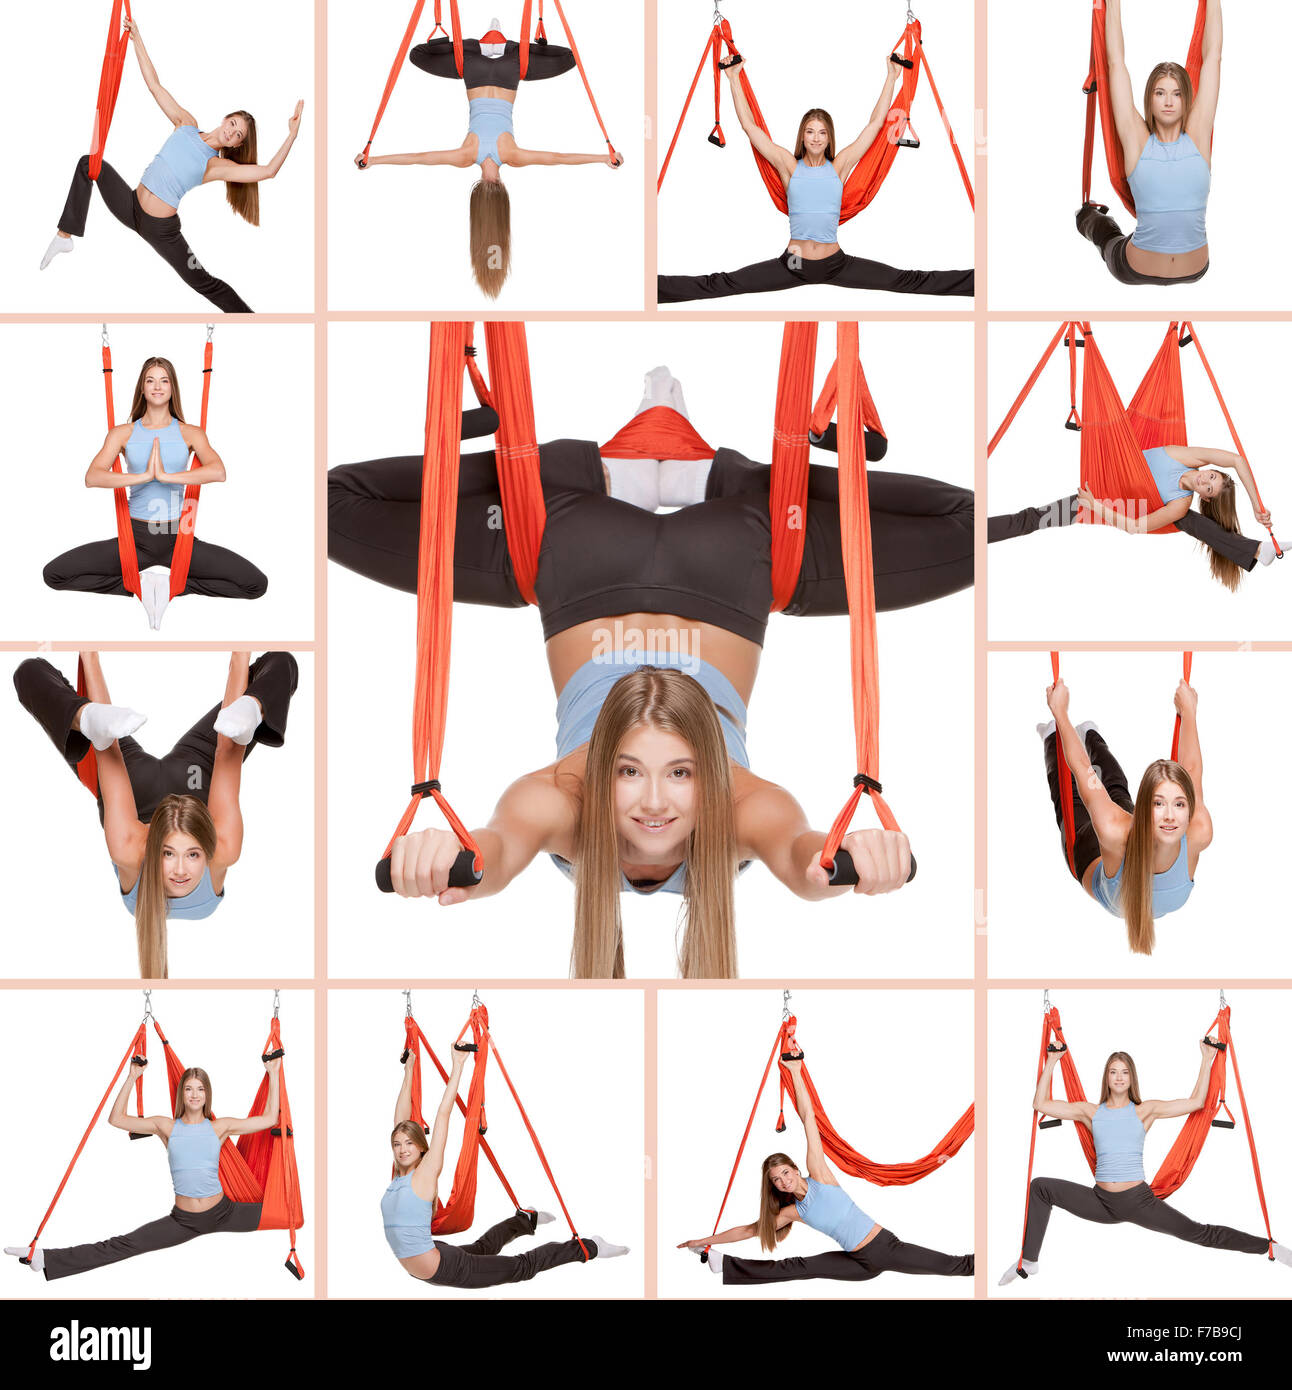 The Yoga Trapeze: Home Practice Tutorial  Yoga trapeze, Aerial yoga poses,  Aerial yoga hammock